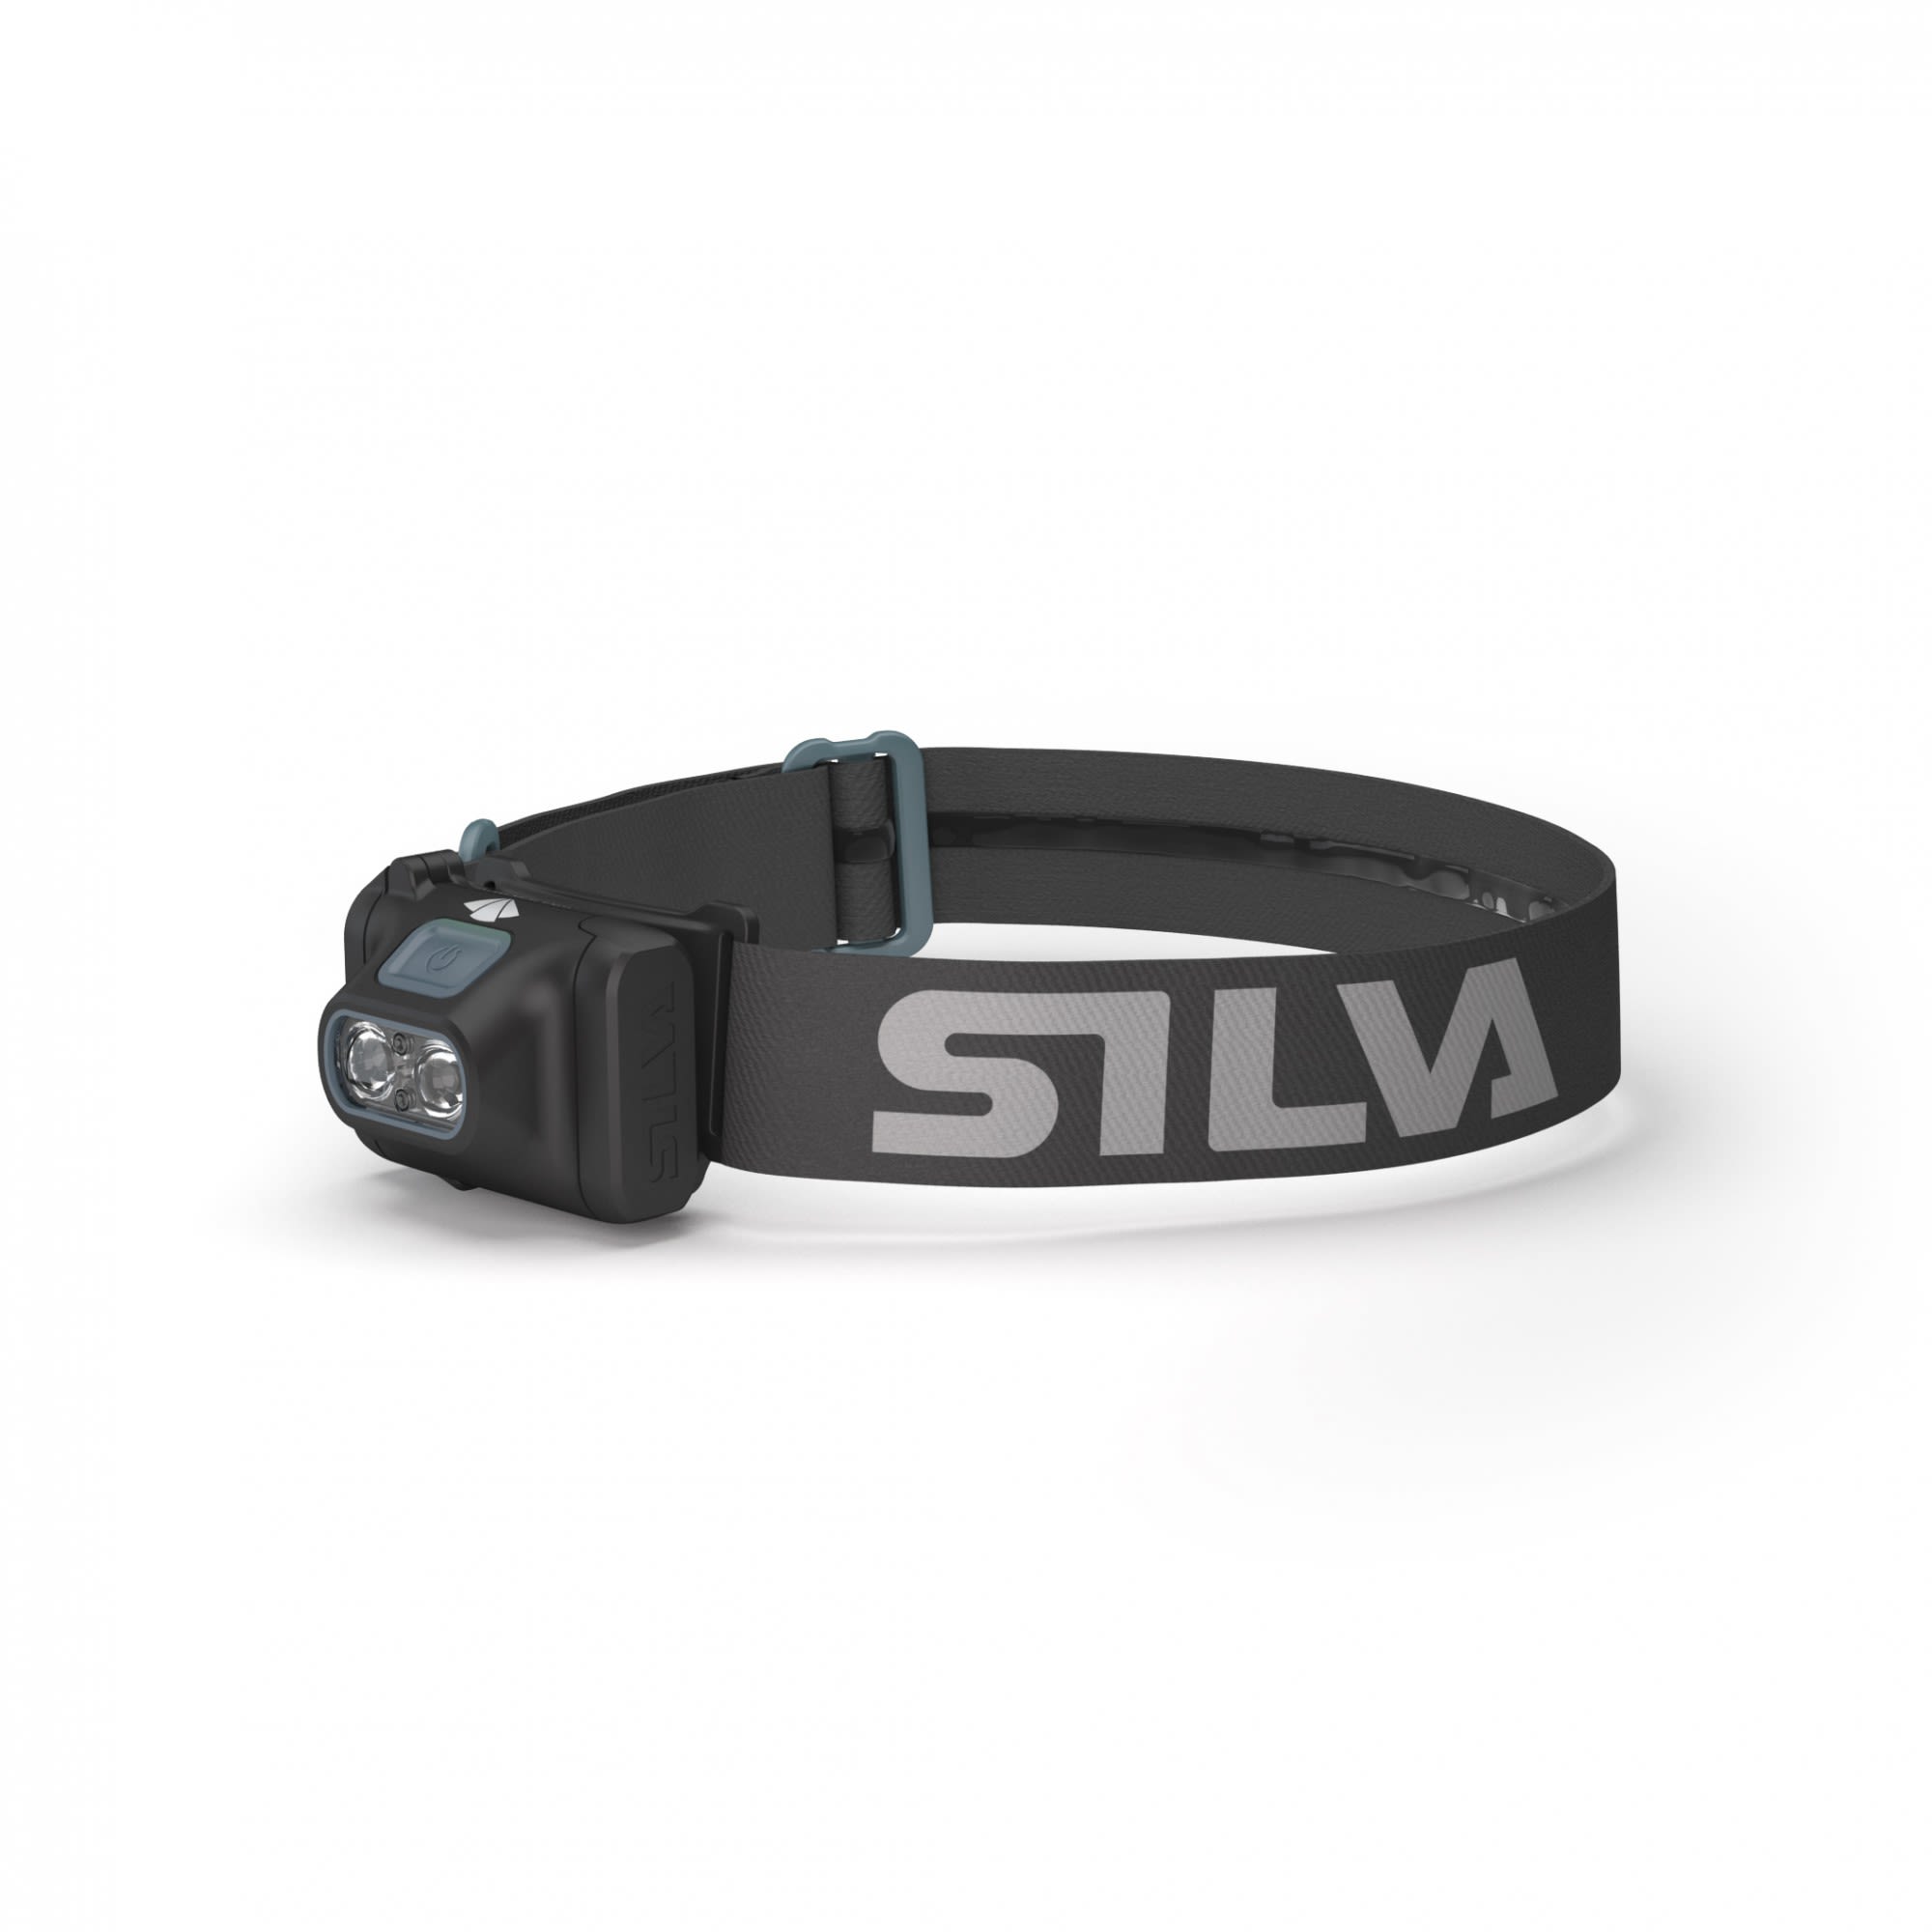 Silva Scout 3xth Schwarz- Stirnlampen- Grsse One Size - Farbe Black - Blue unter Silva